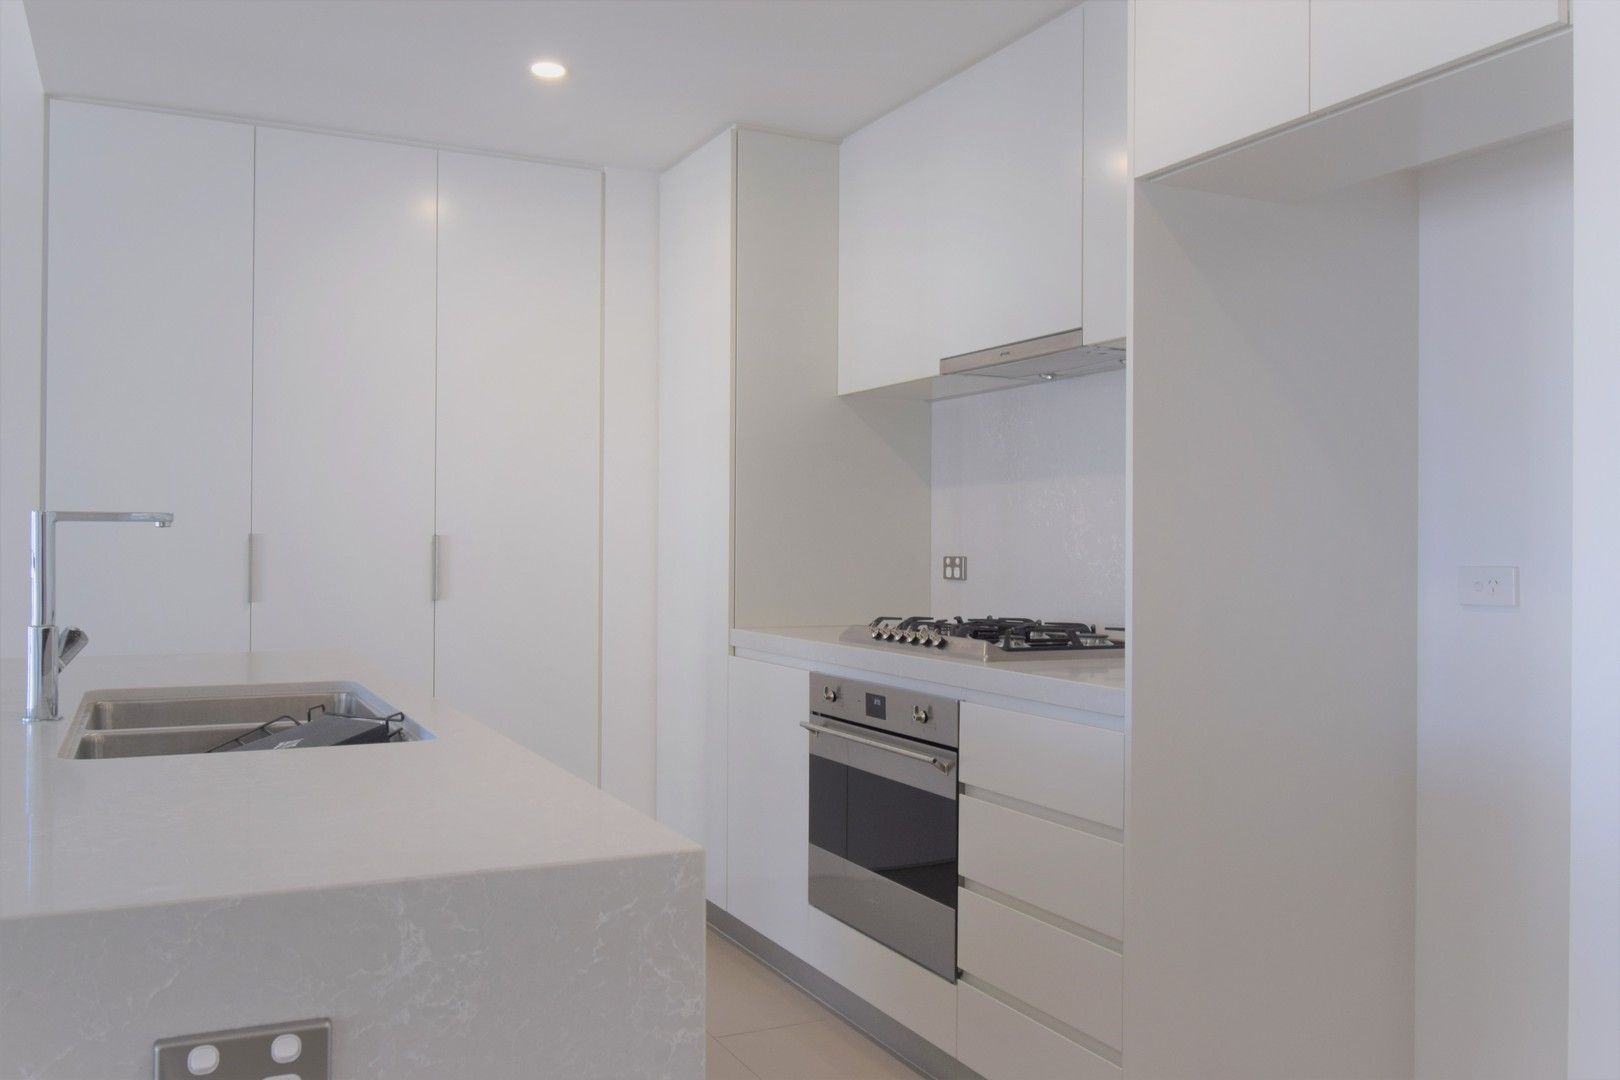 2 bedrooms Apartment / Unit / Flat in 1310/17 Chisholm Street WOLLI CREEK NSW, 2205